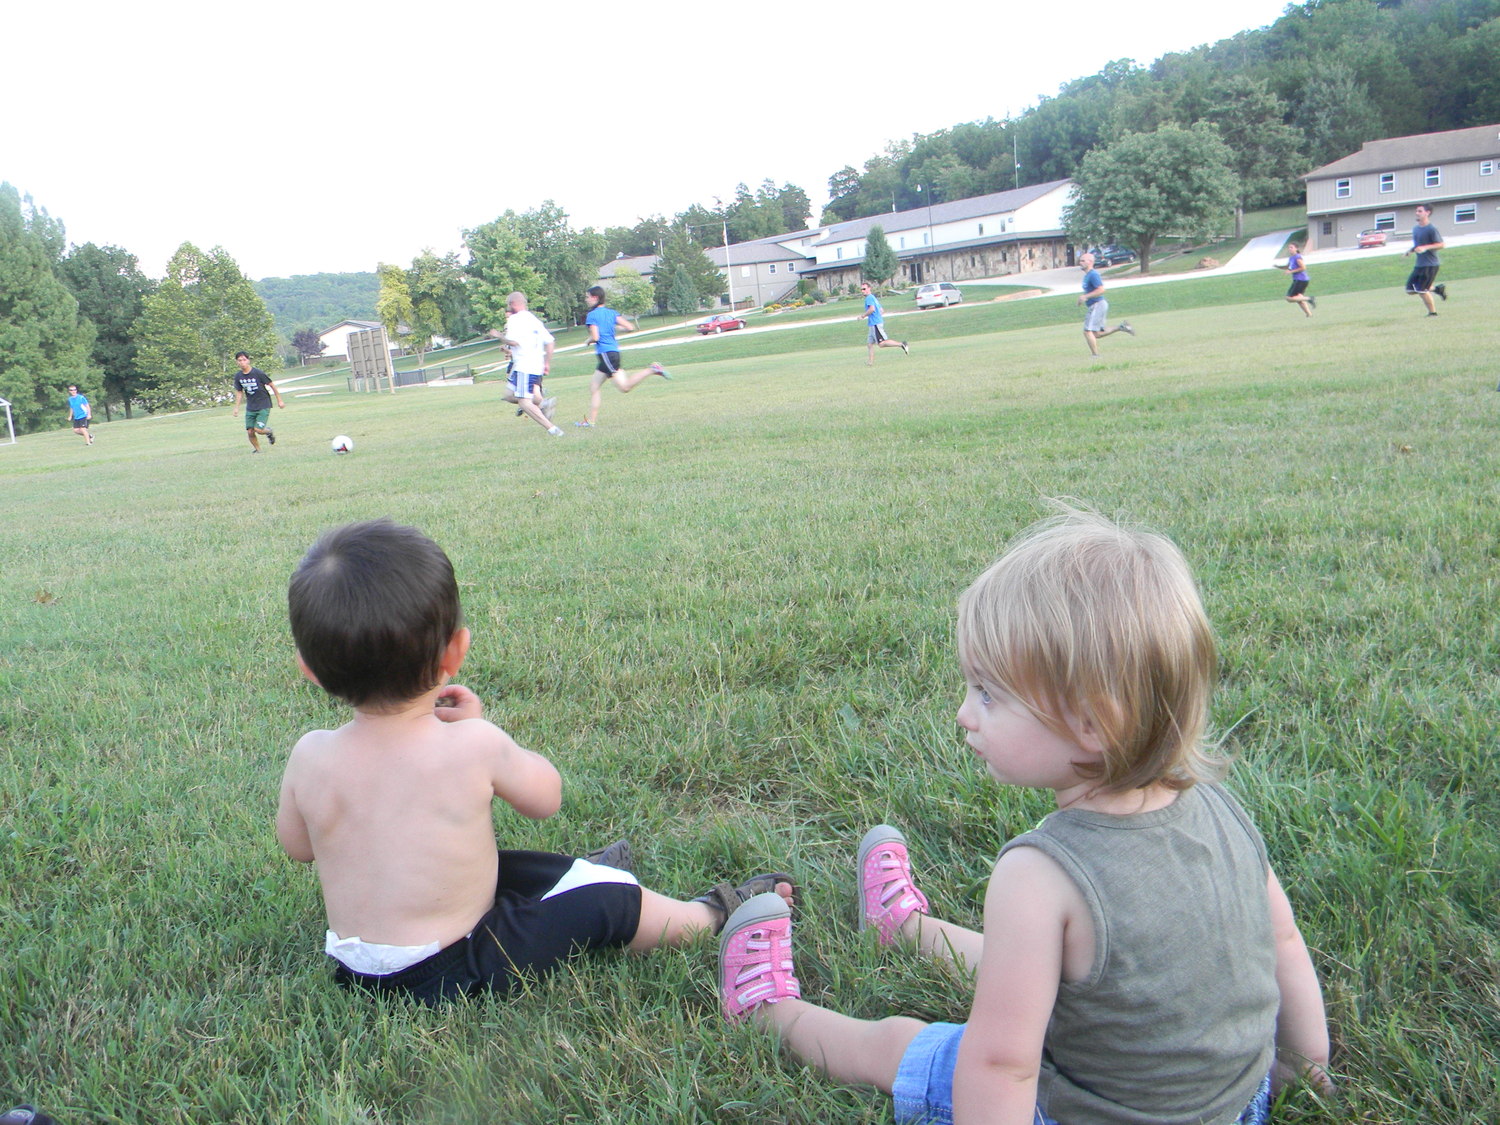 Judah and his friend Selah watching the soccer game